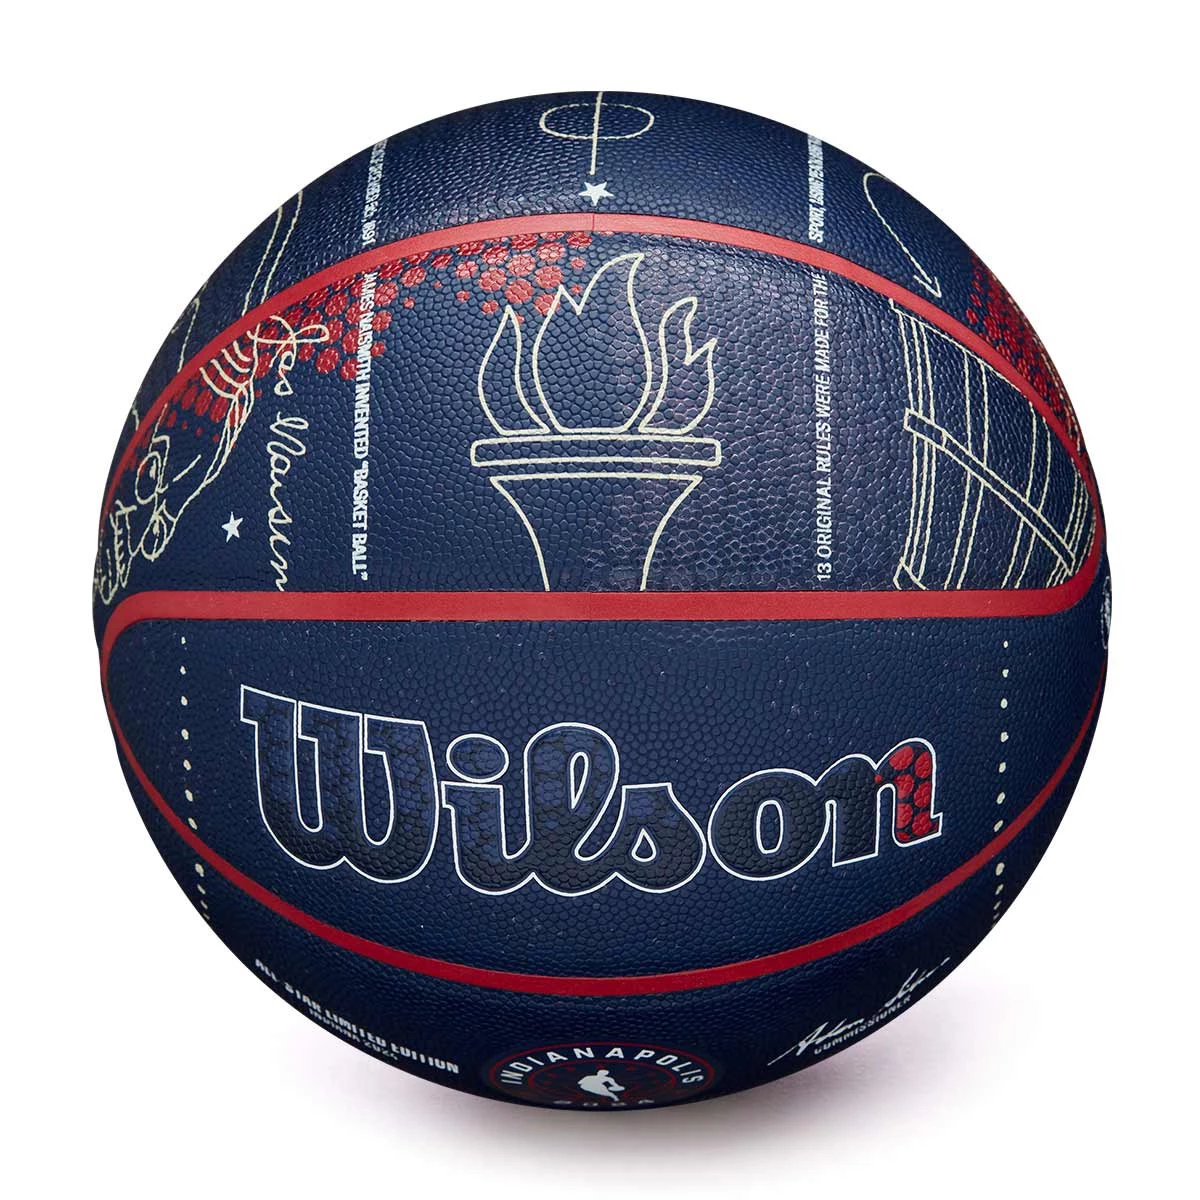 Balon Baloncesto Wilson Authentic N°7 WILSON